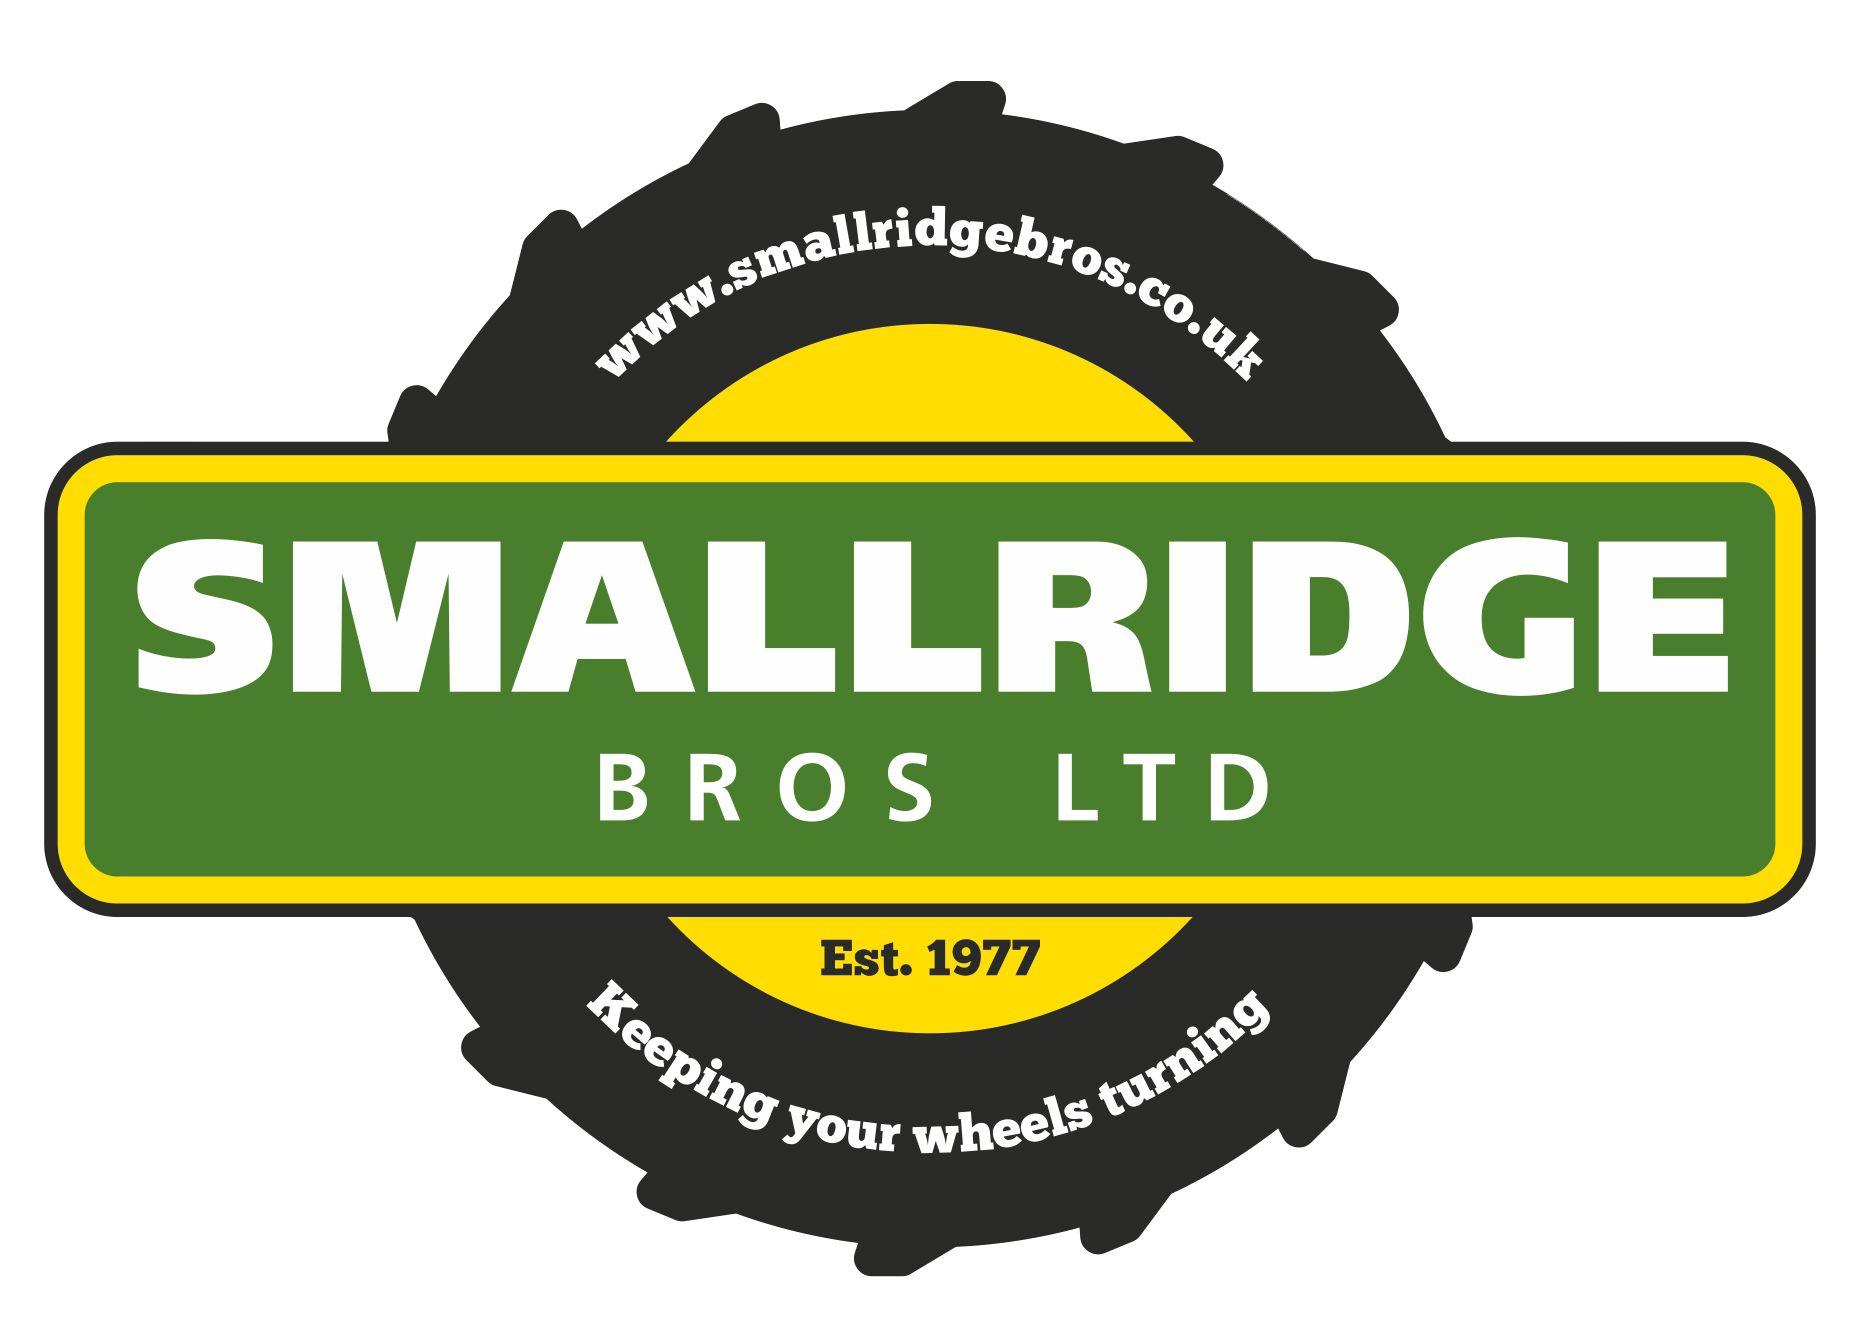 Small John Deere Logo - Smallridge Bros Ltd